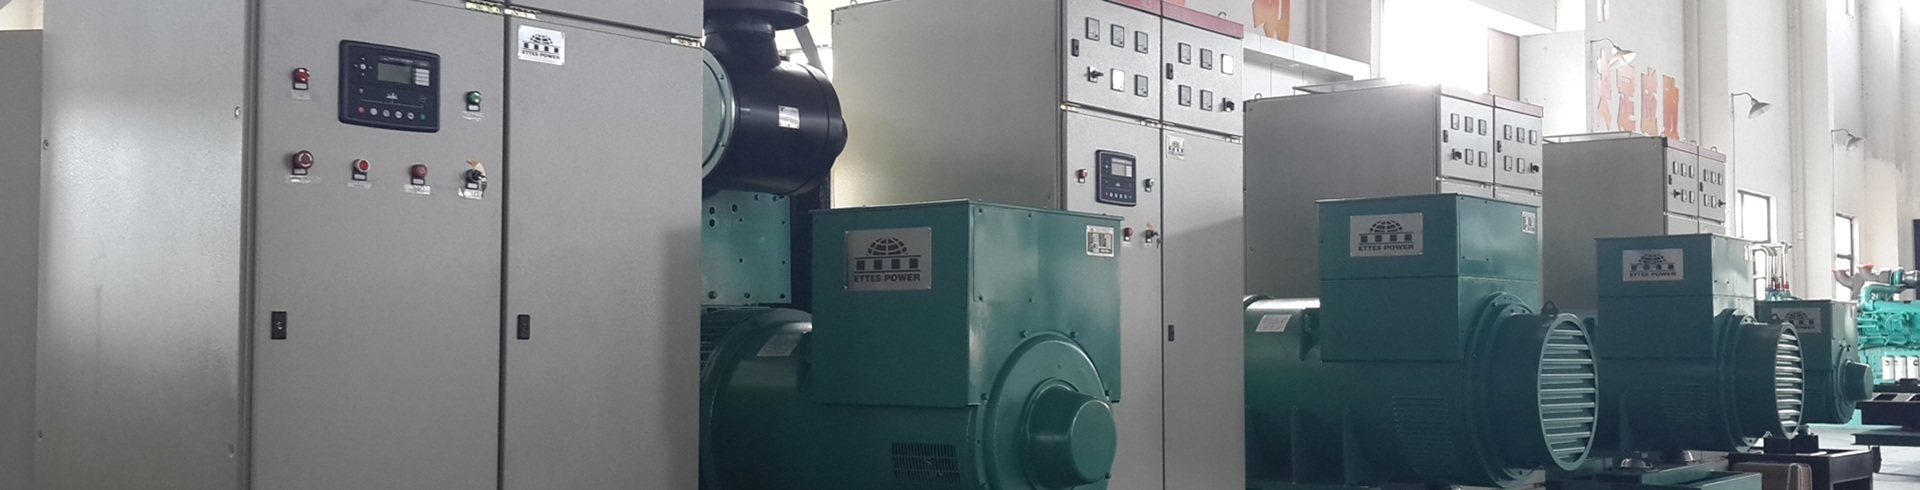 Ettespower 1000kw 1mw cummins Diesel generator set manufacture Ettes Power Group